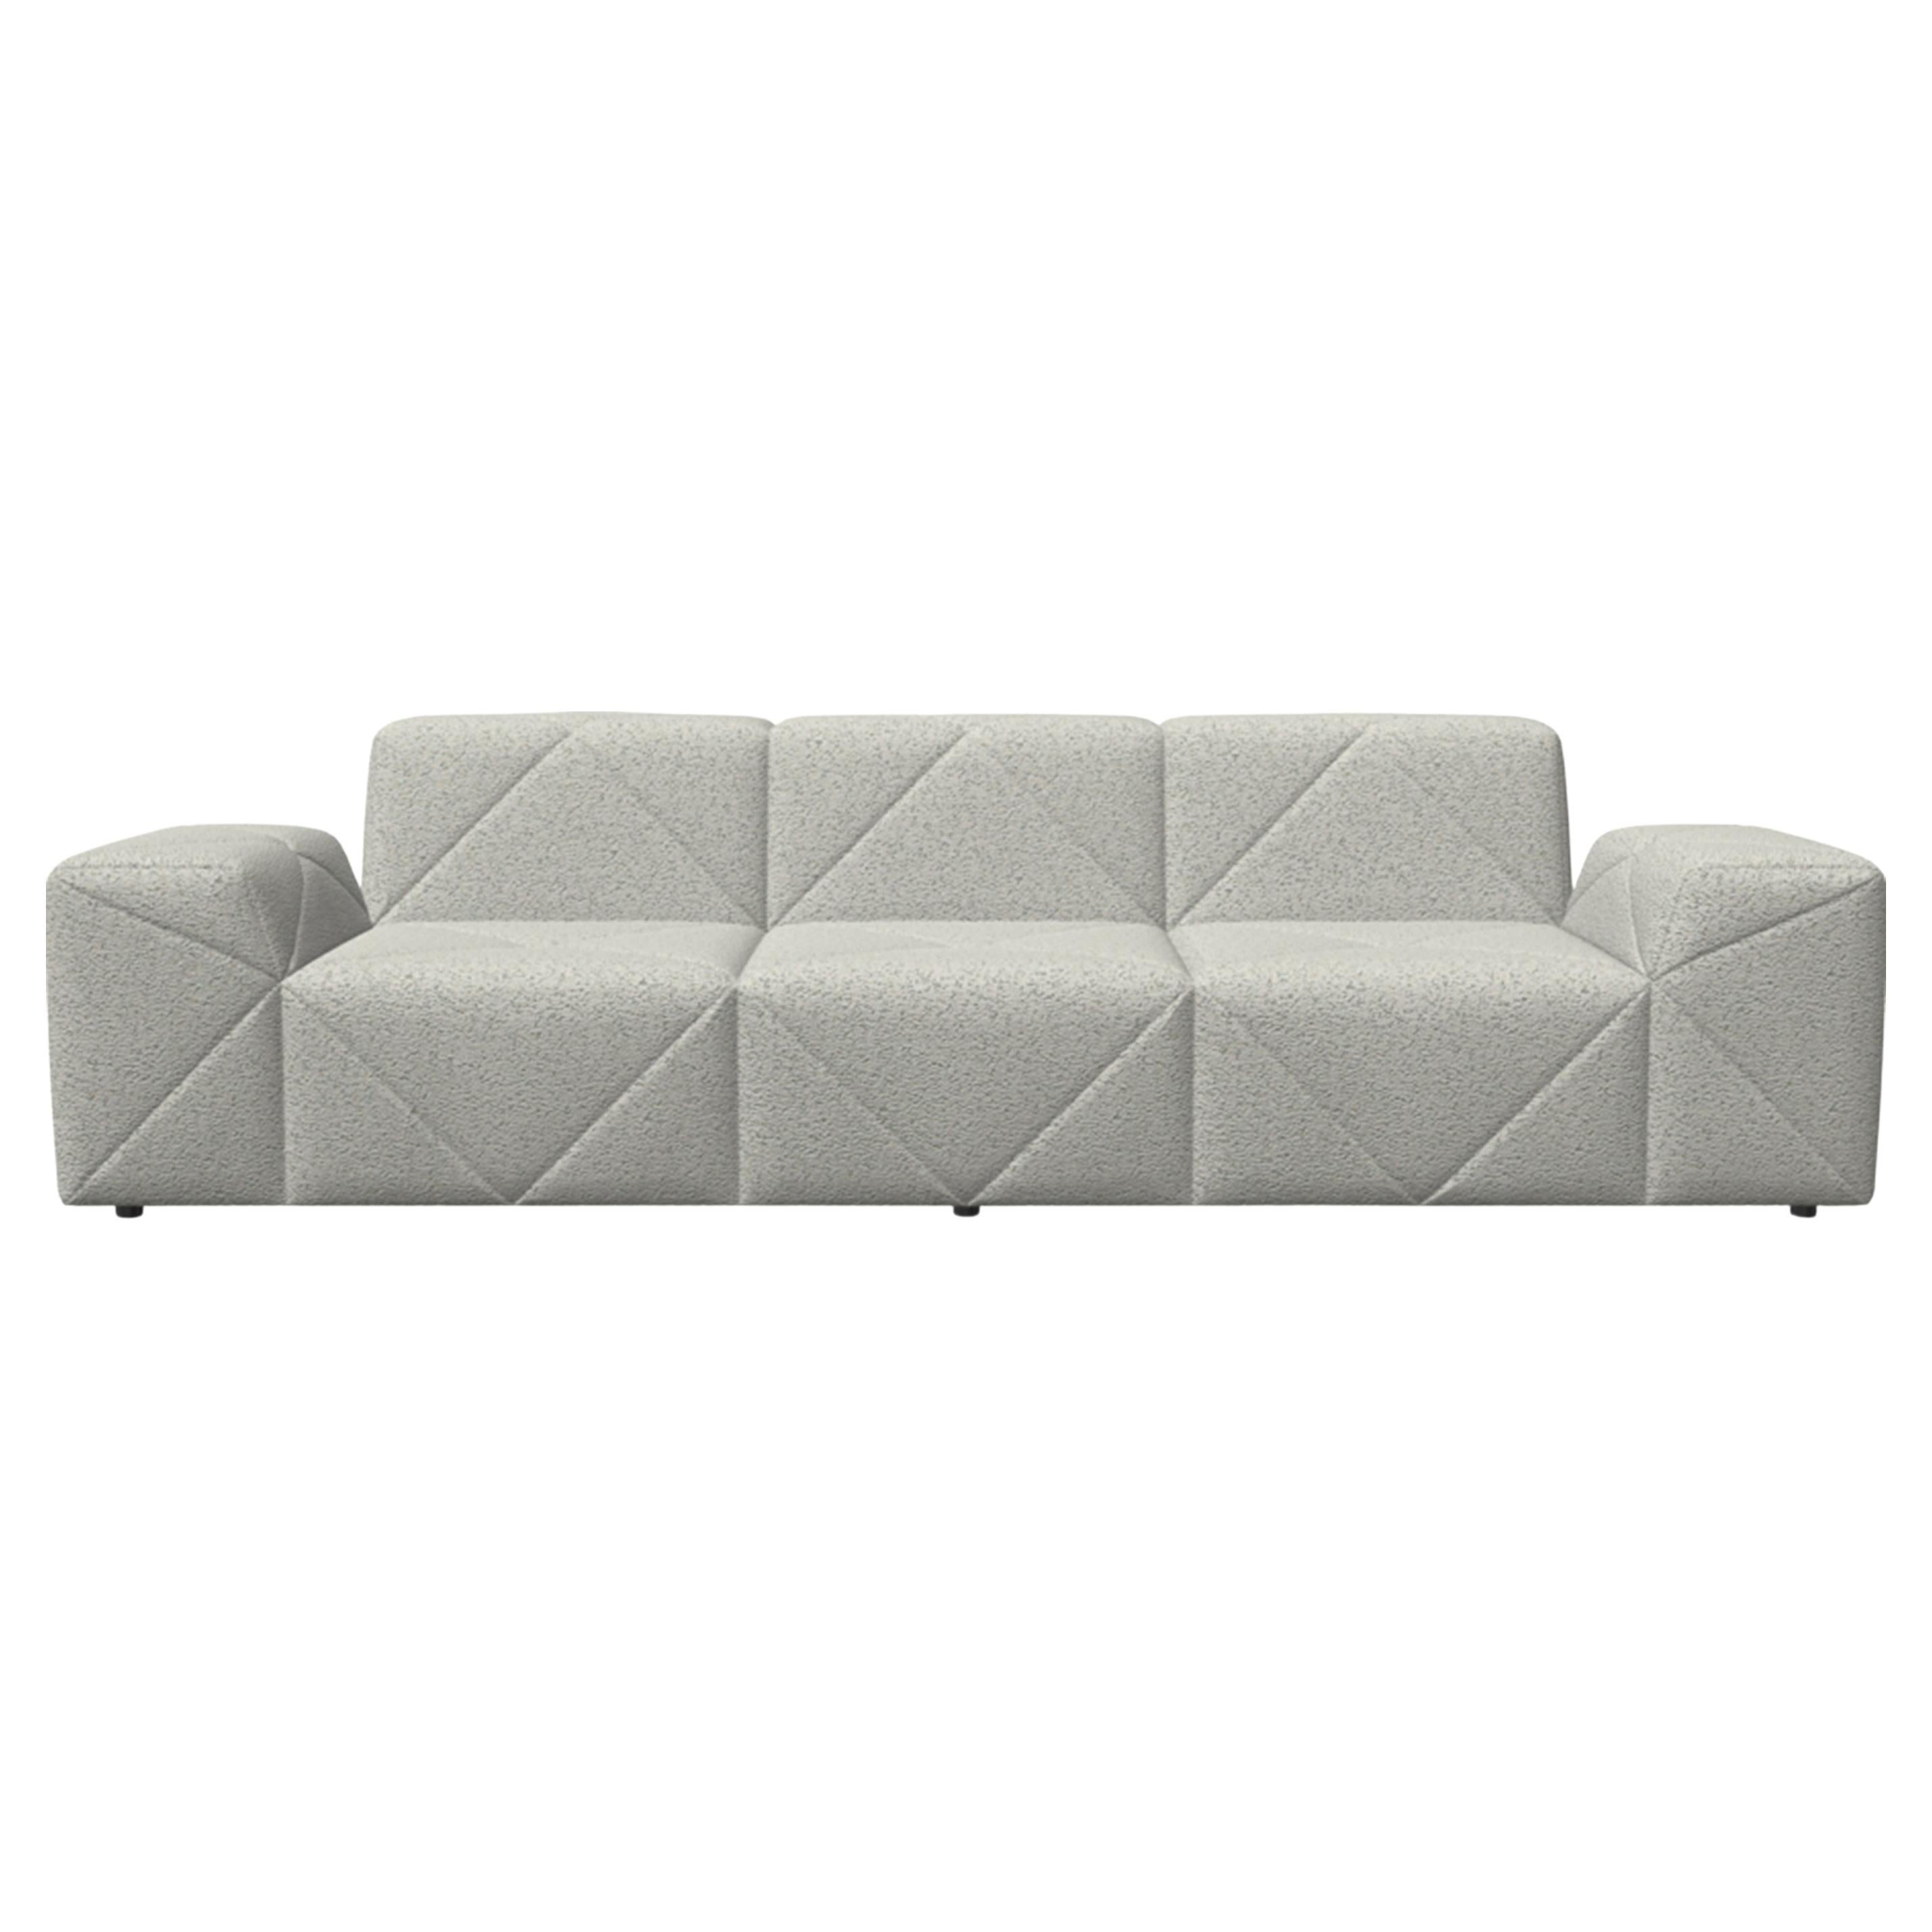 Moooi BFF Triple Seater TE01 Low Sofa in Dodo Pavone Jacquard White Upholstery